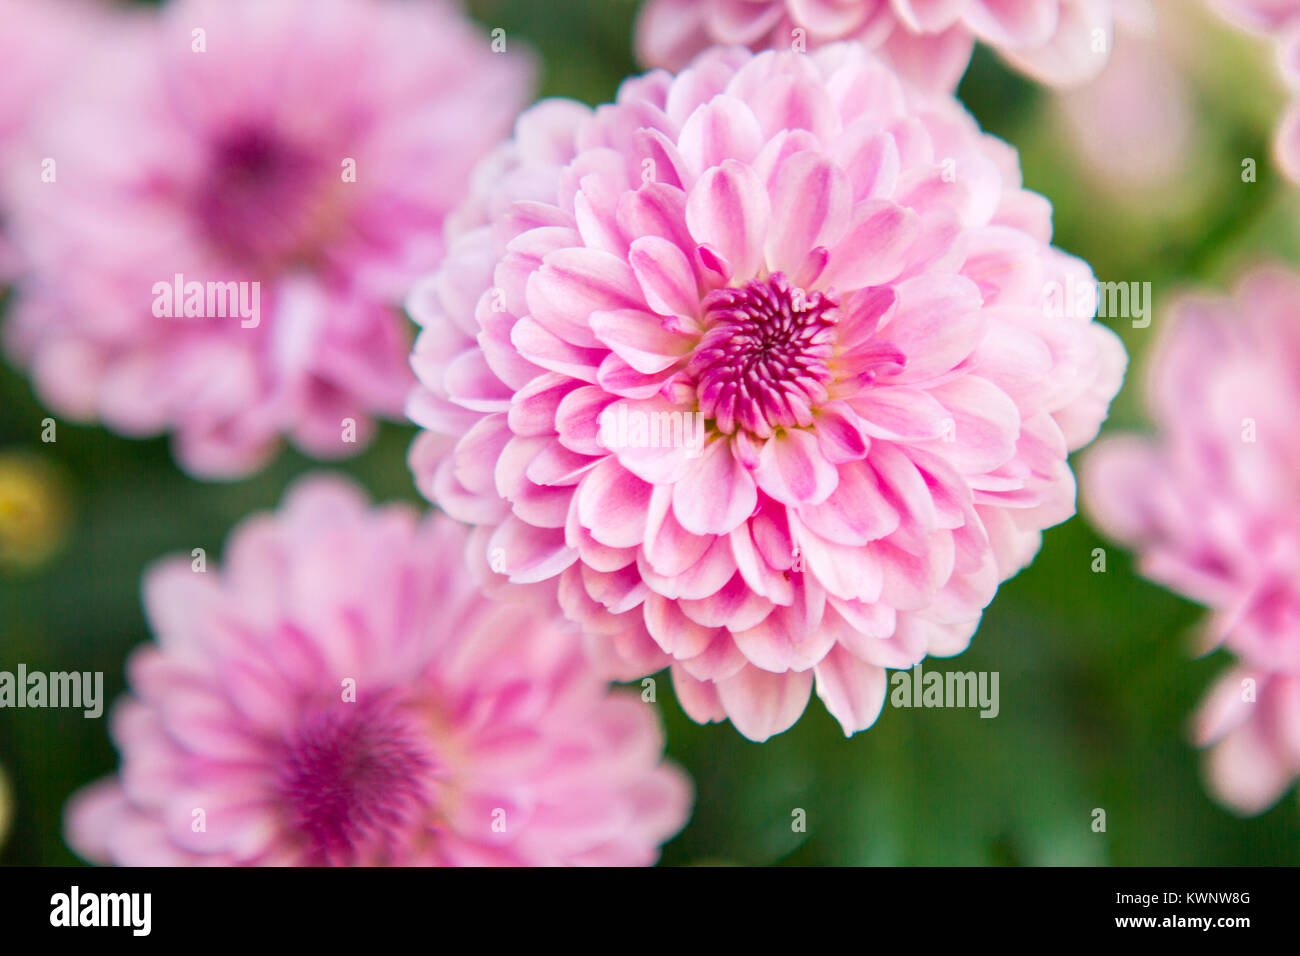 Pink chrysanthemum flowers up close Stock Photo